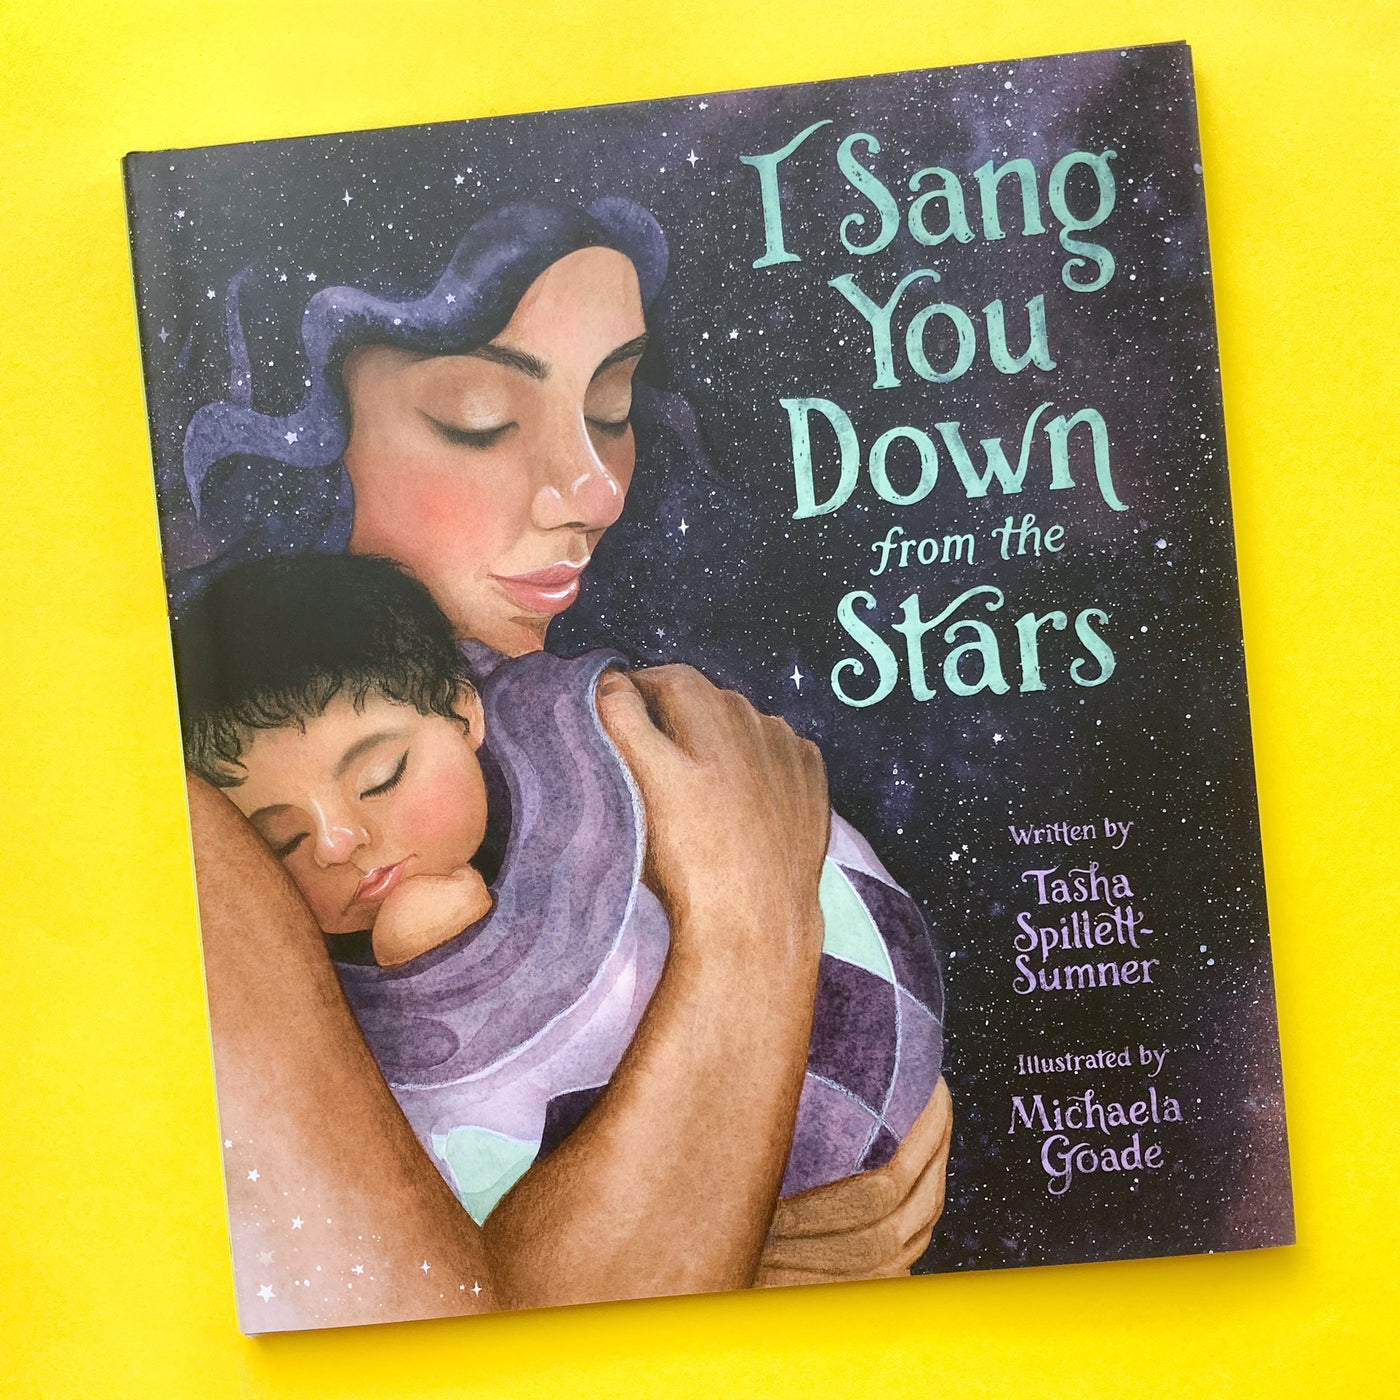 I Sang You Down from the Stars by Tasha Spillett-Sumner and Michaela Goade